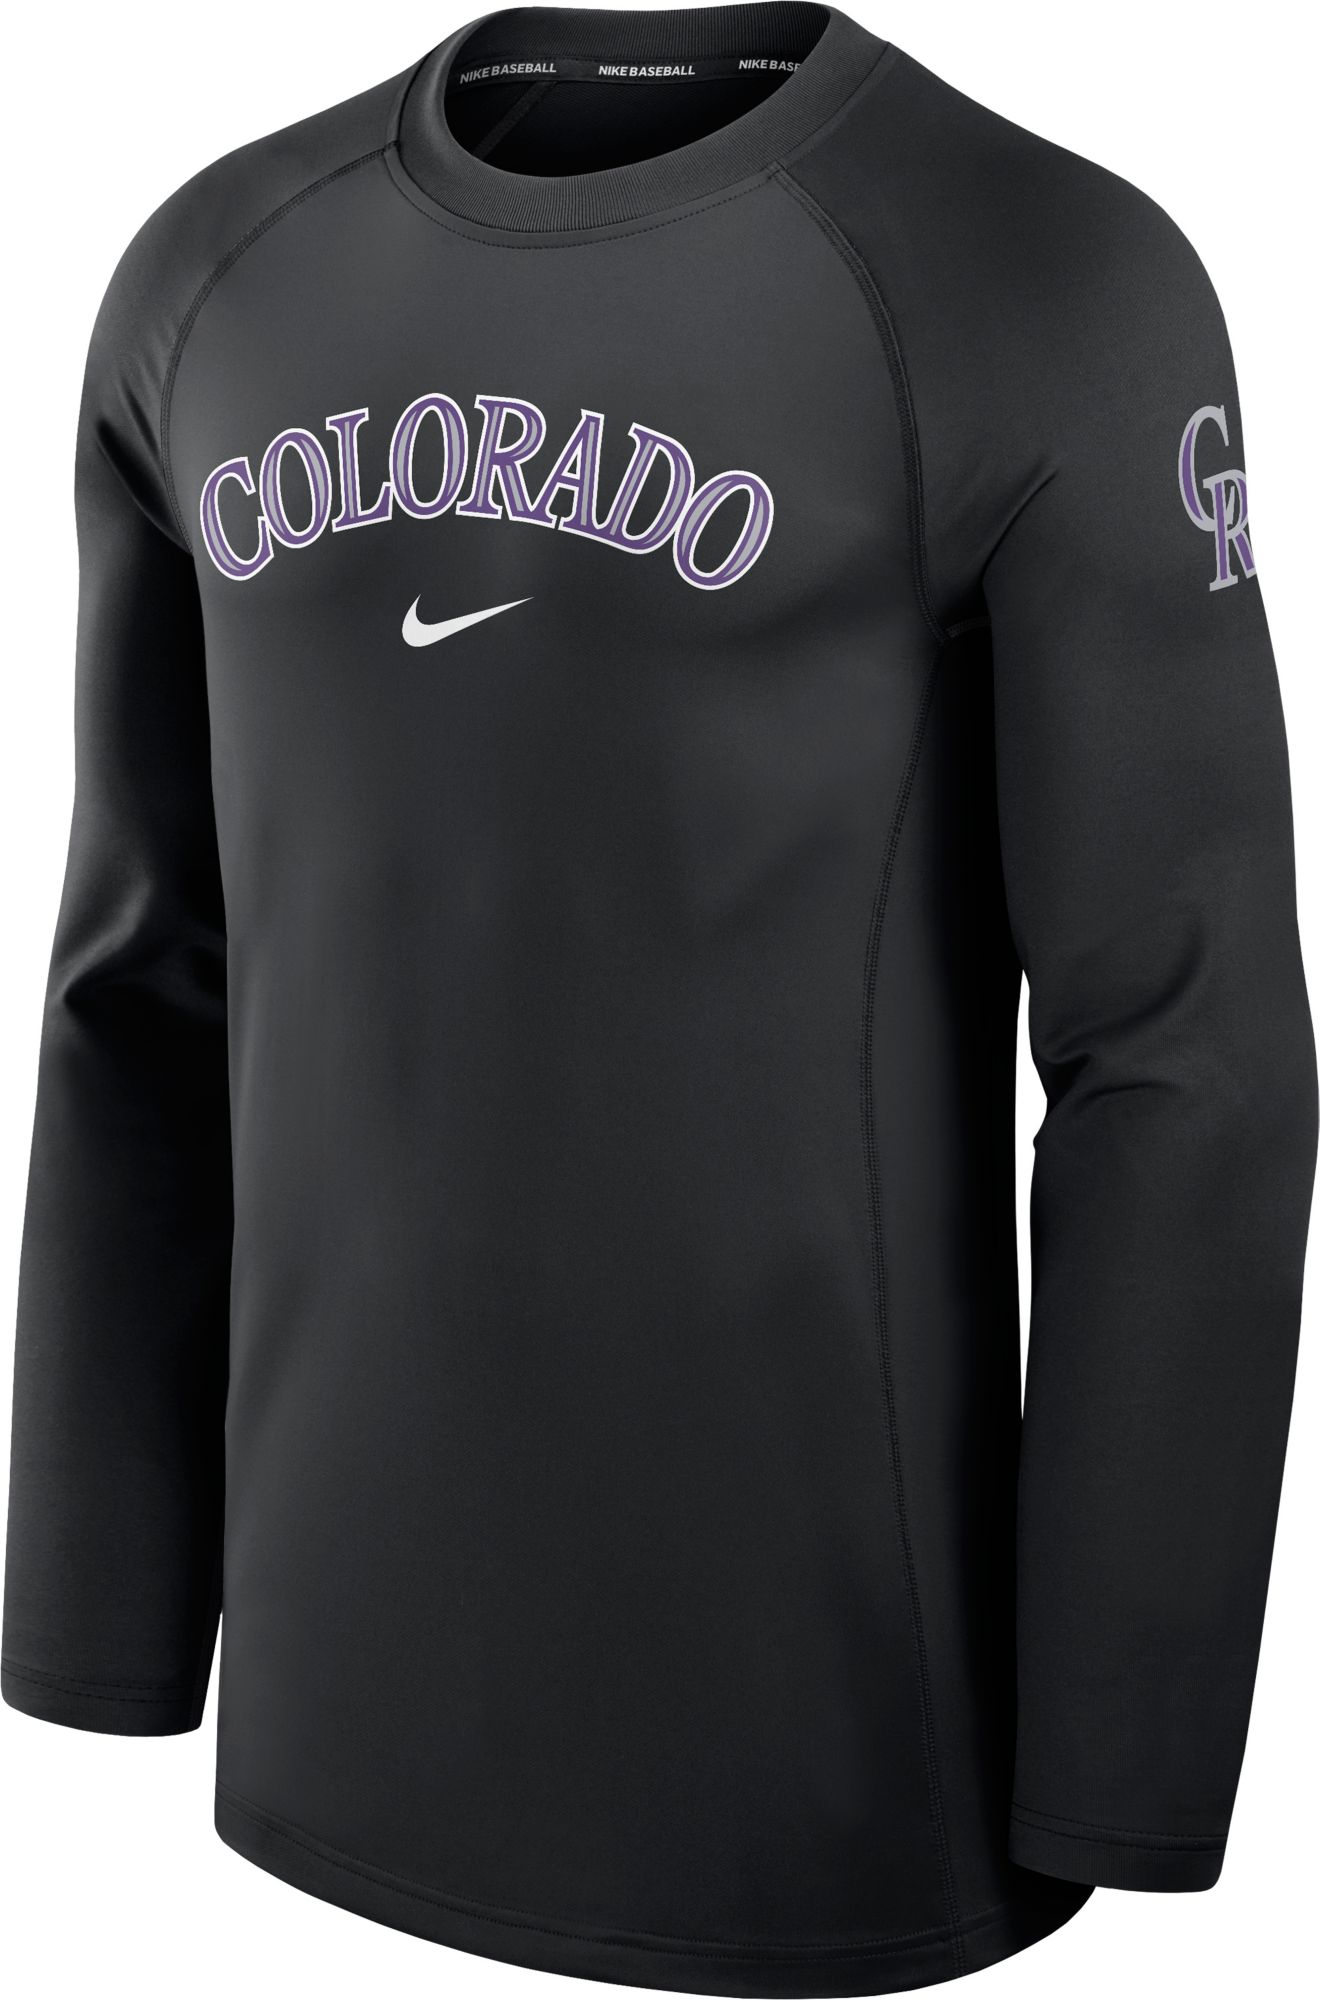 Nike Men's Colorado Rockies Black Authentic Collection Game Crew Neck Sweatshirt